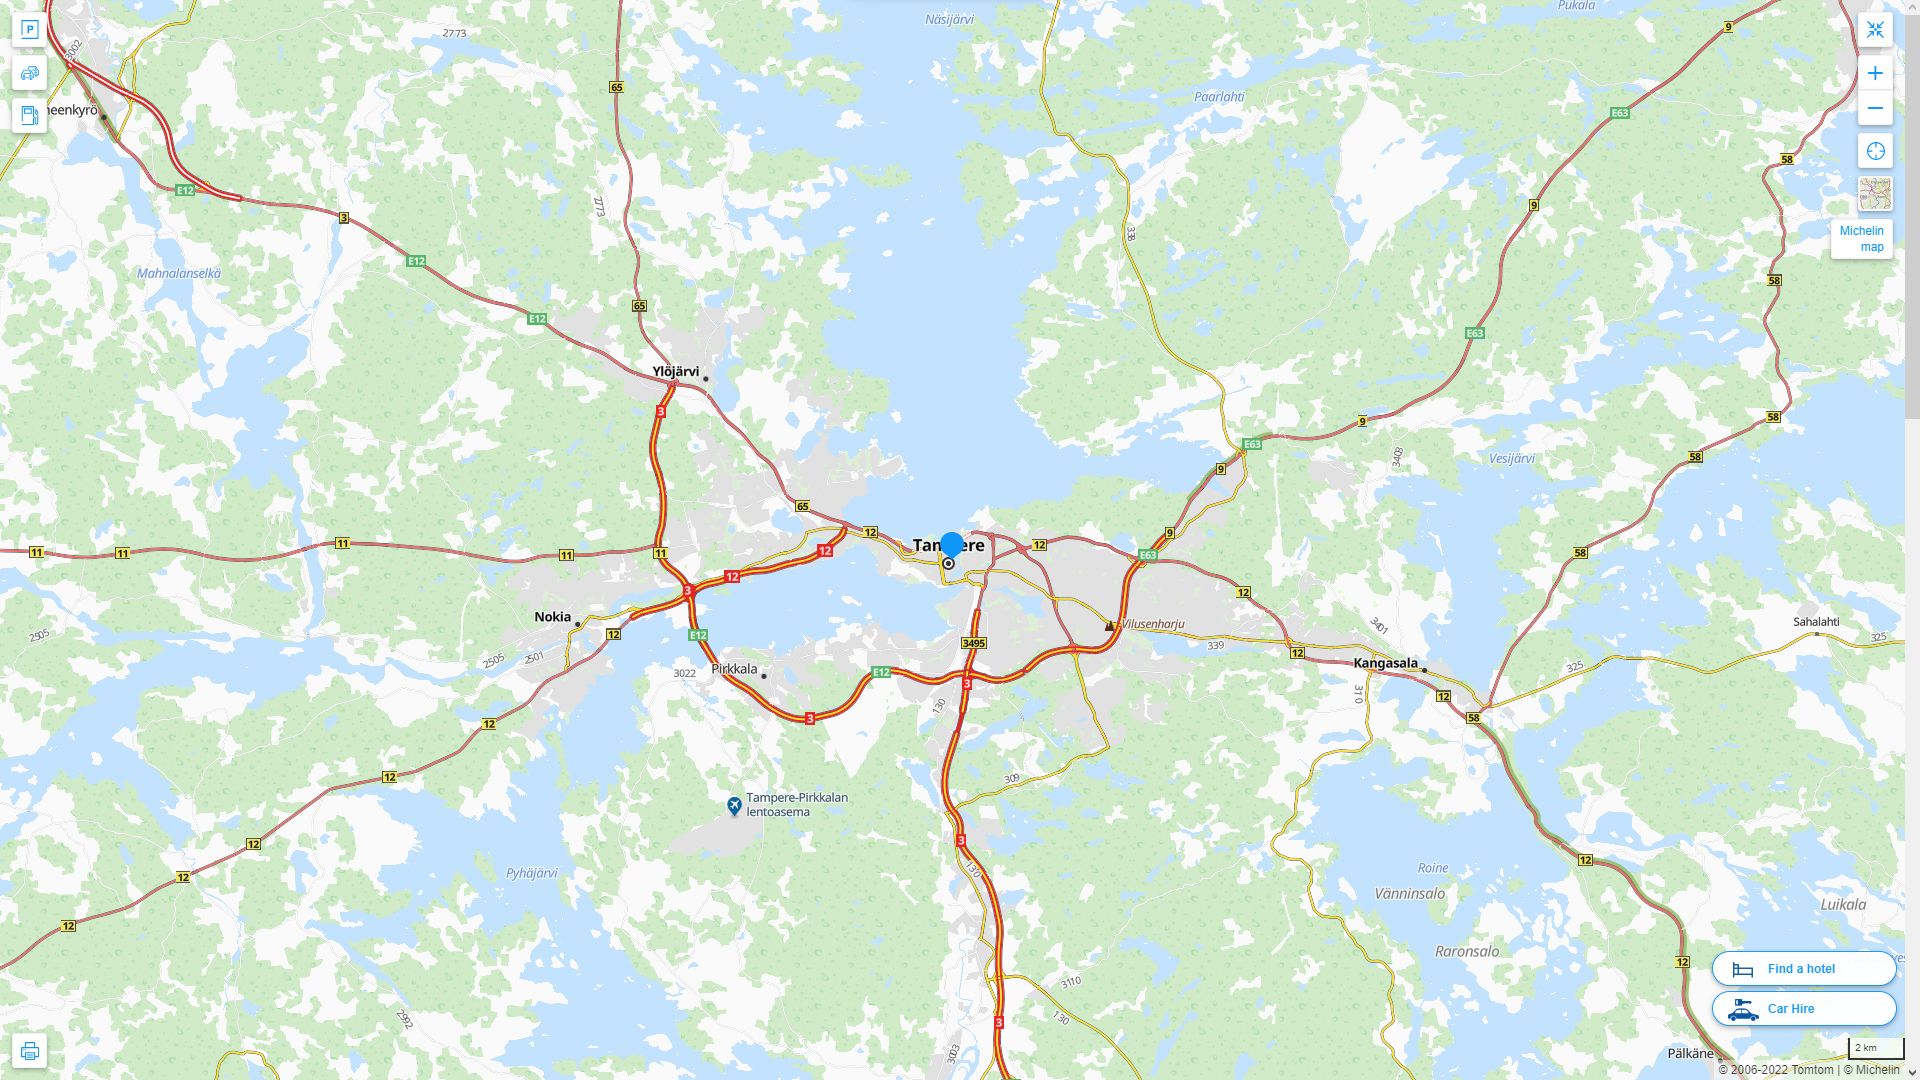 Tampere Finlande Autoroute et carte routiere